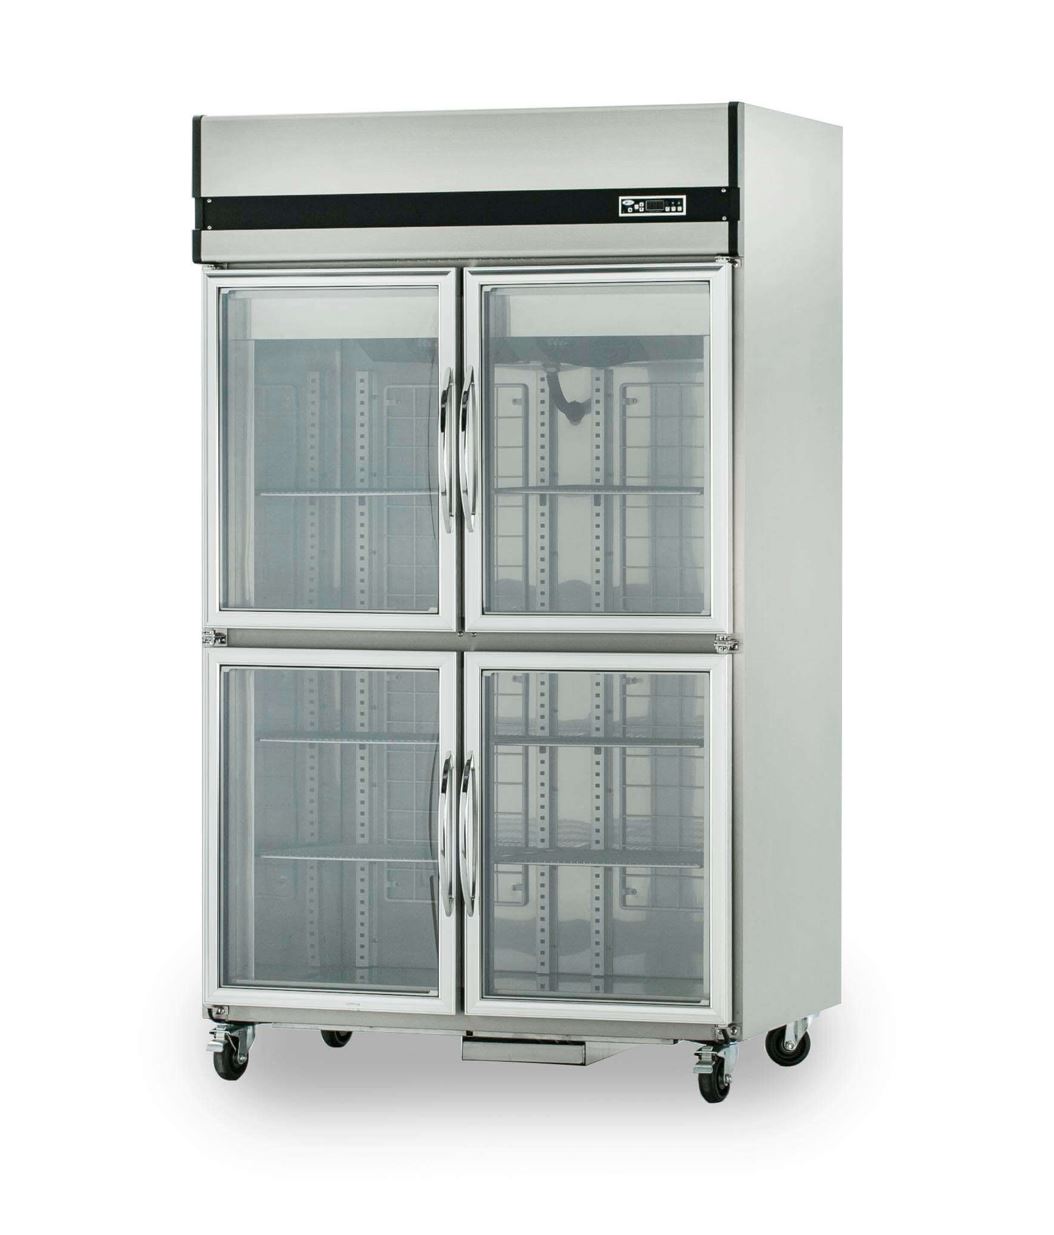 Upright Refrigerated Refrigerator with glass door.